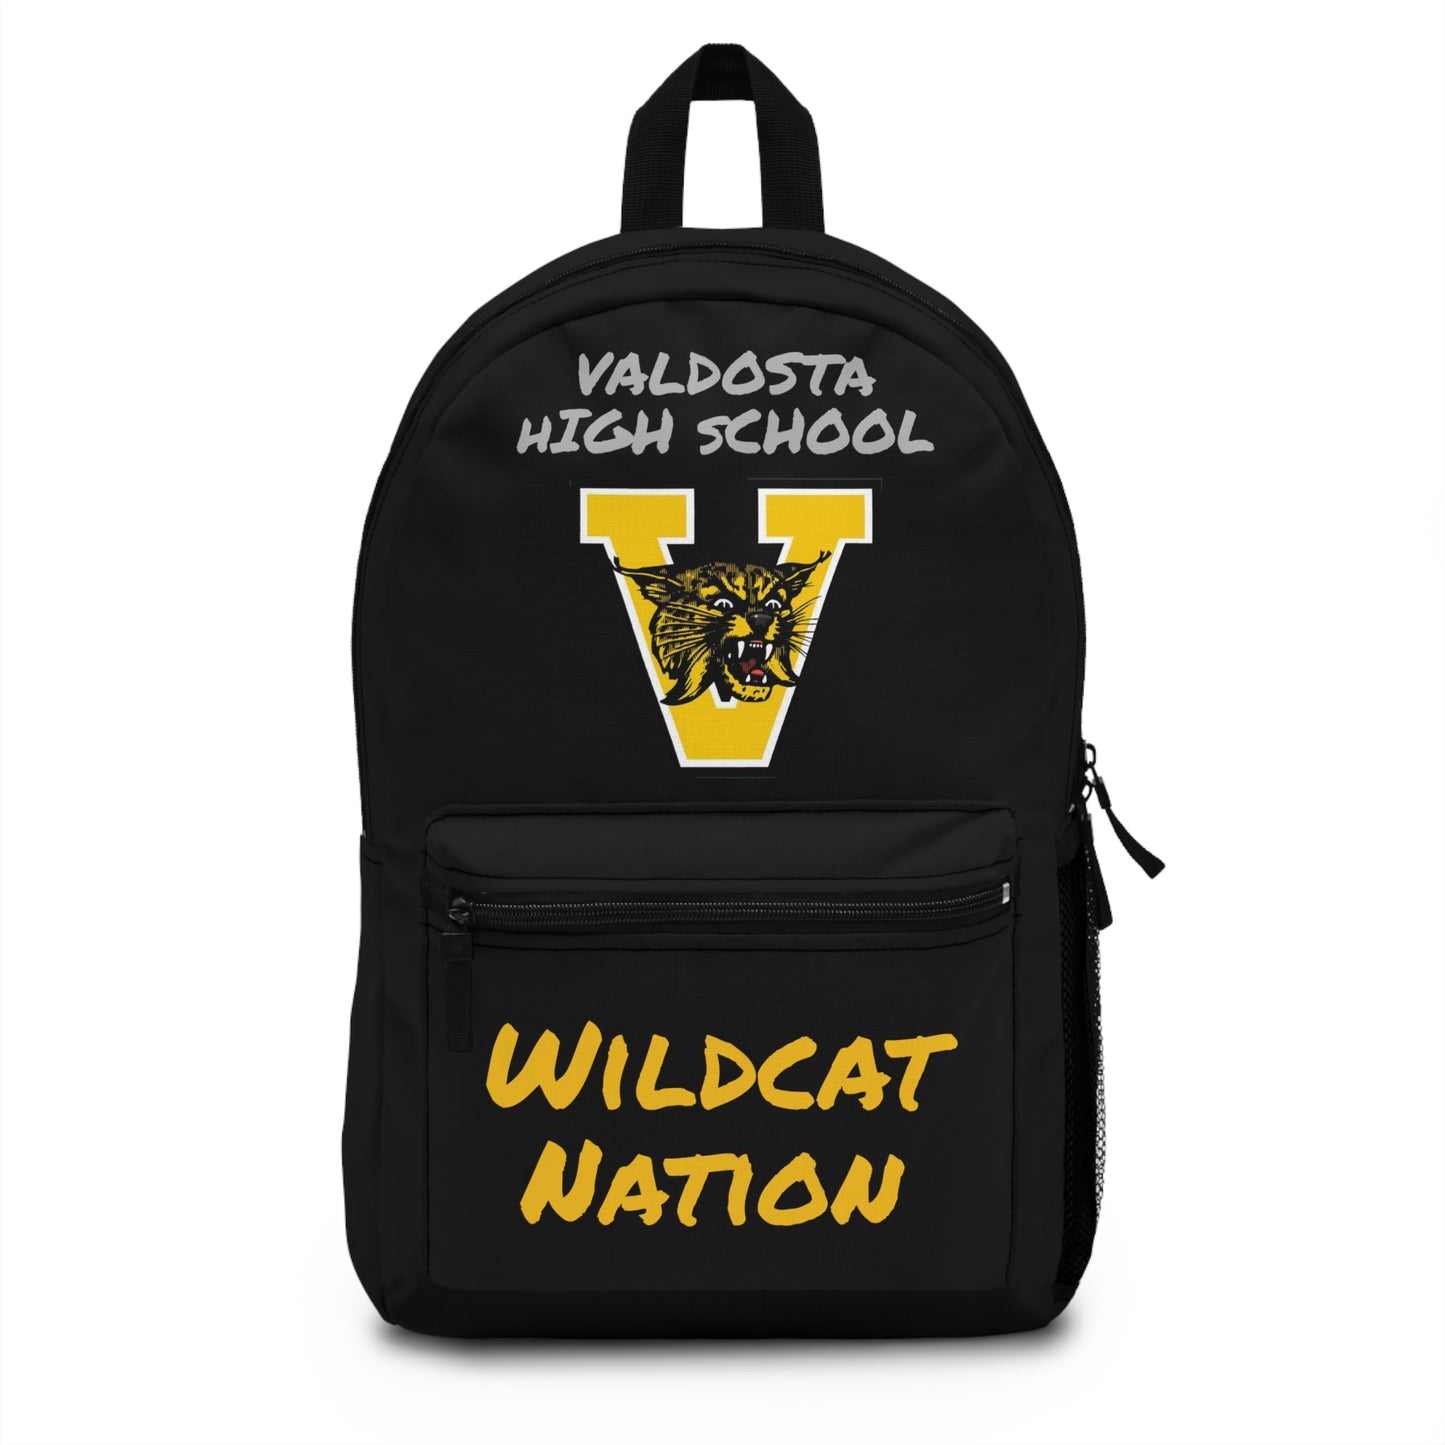 School Spirit (Valdosta High School/ Backpack)